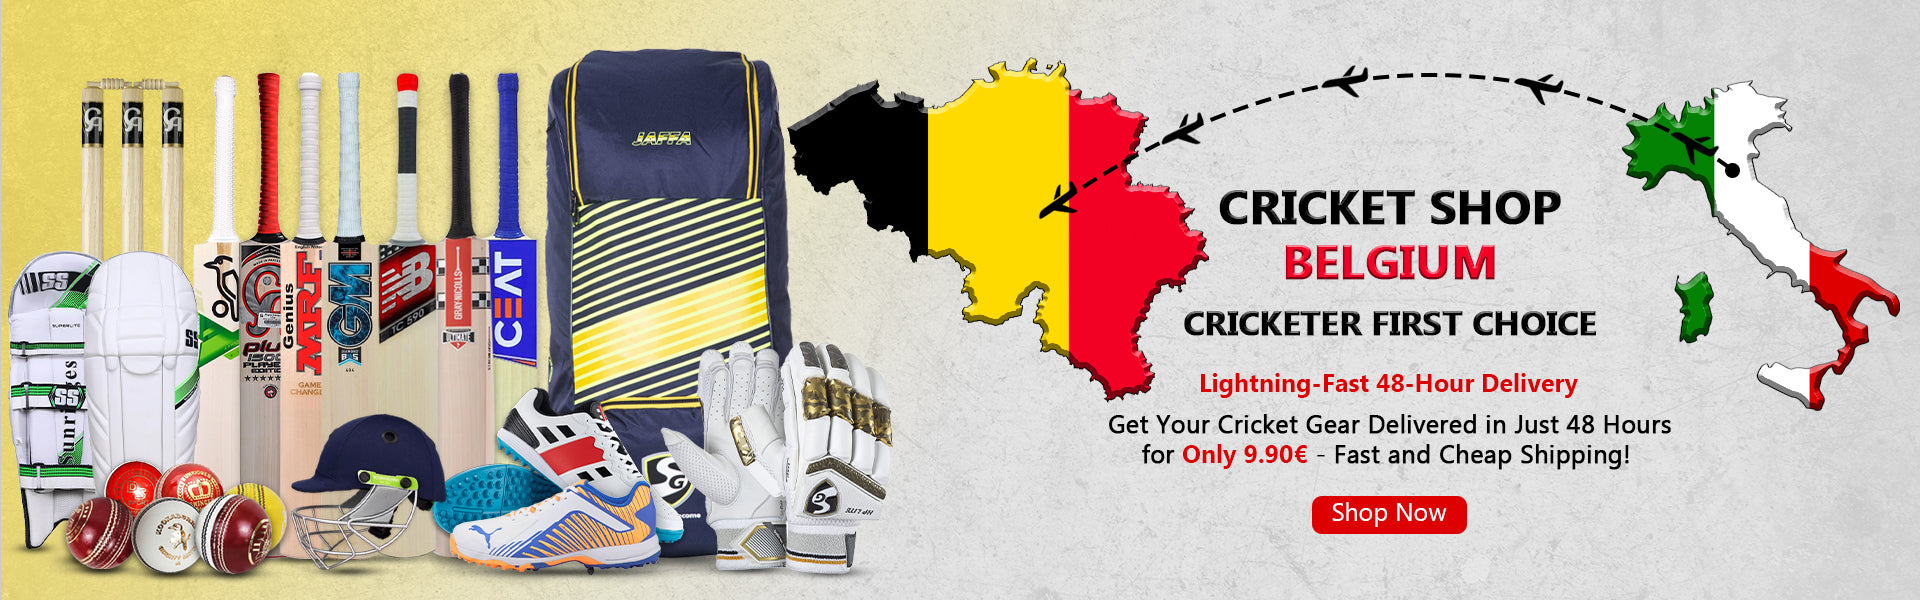 Cricket Shop Belgium | Cricketer first Choice